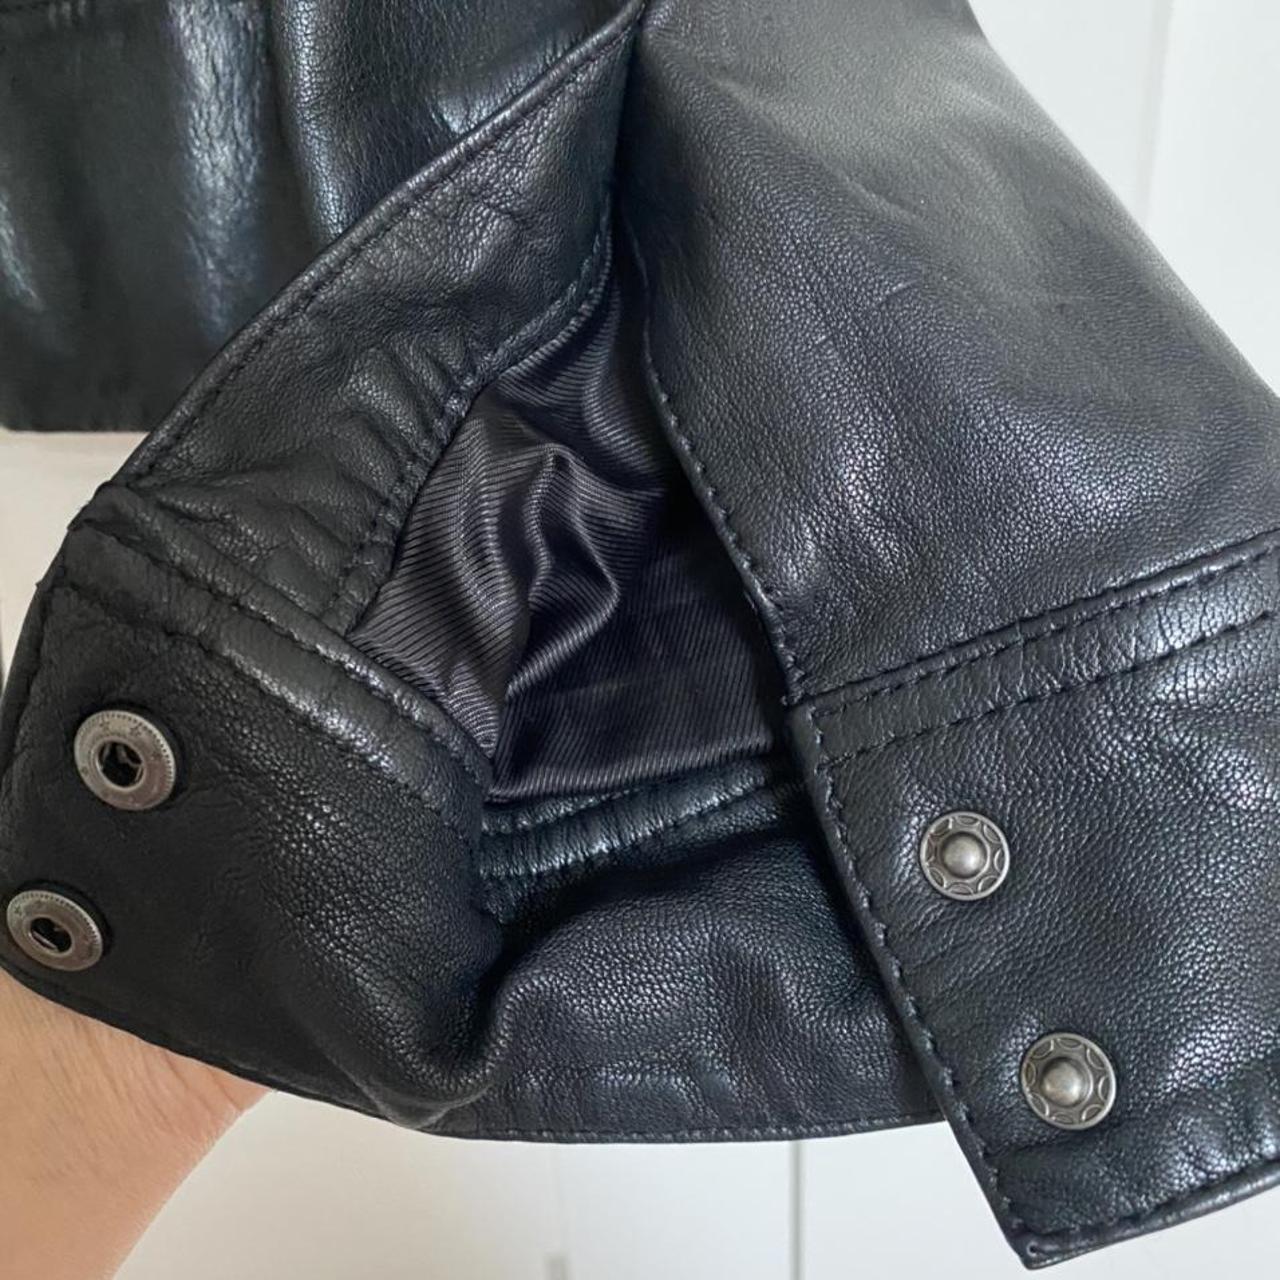 Product Image 2 - AllSaints leather jacket. Slim fit.